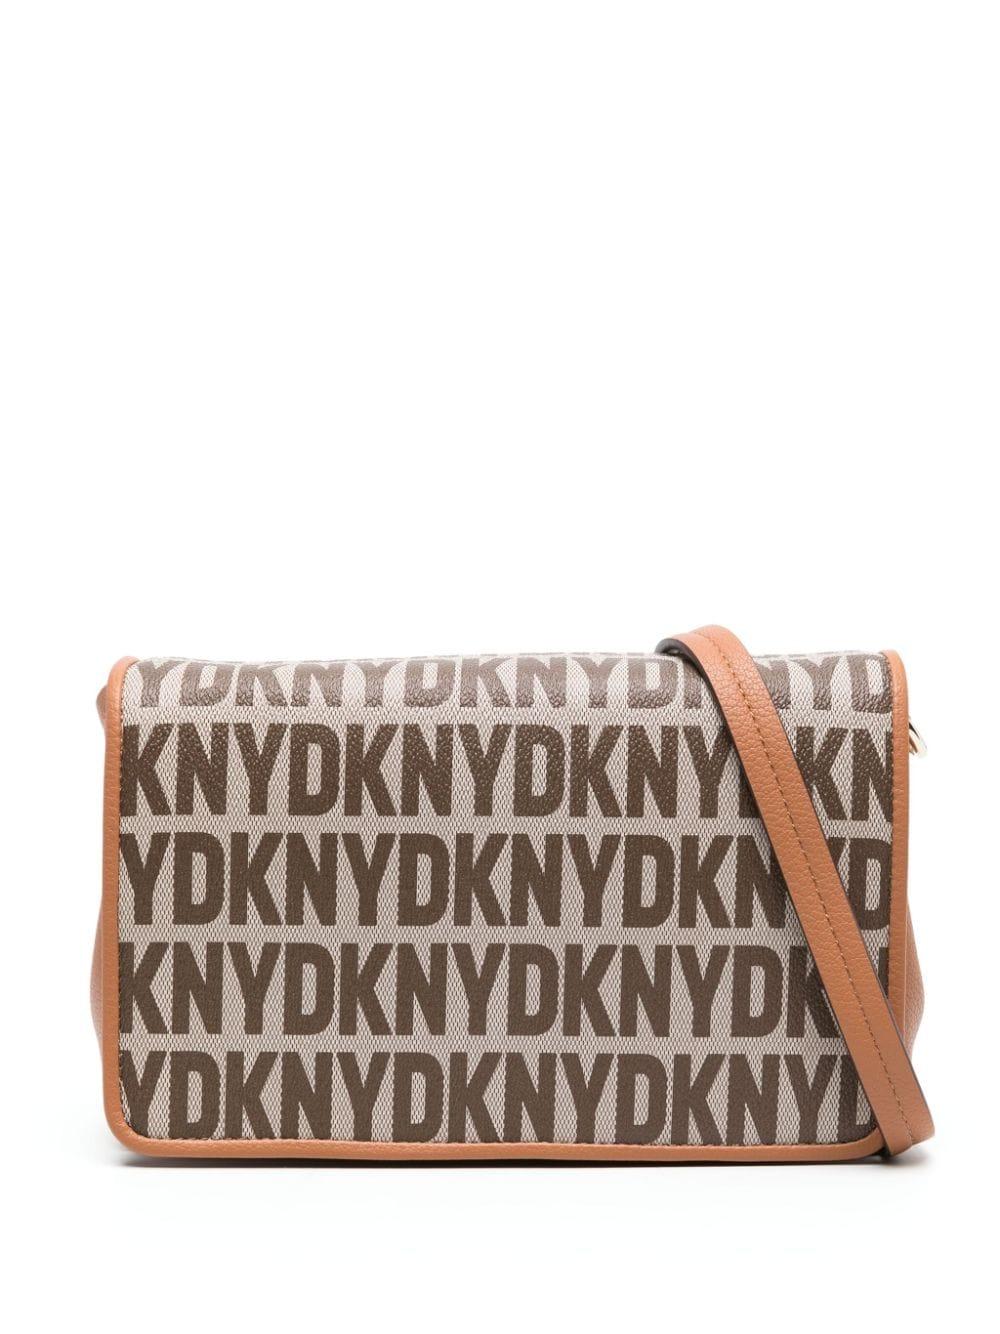 DKNY - Bryant logo leather cross-body bag